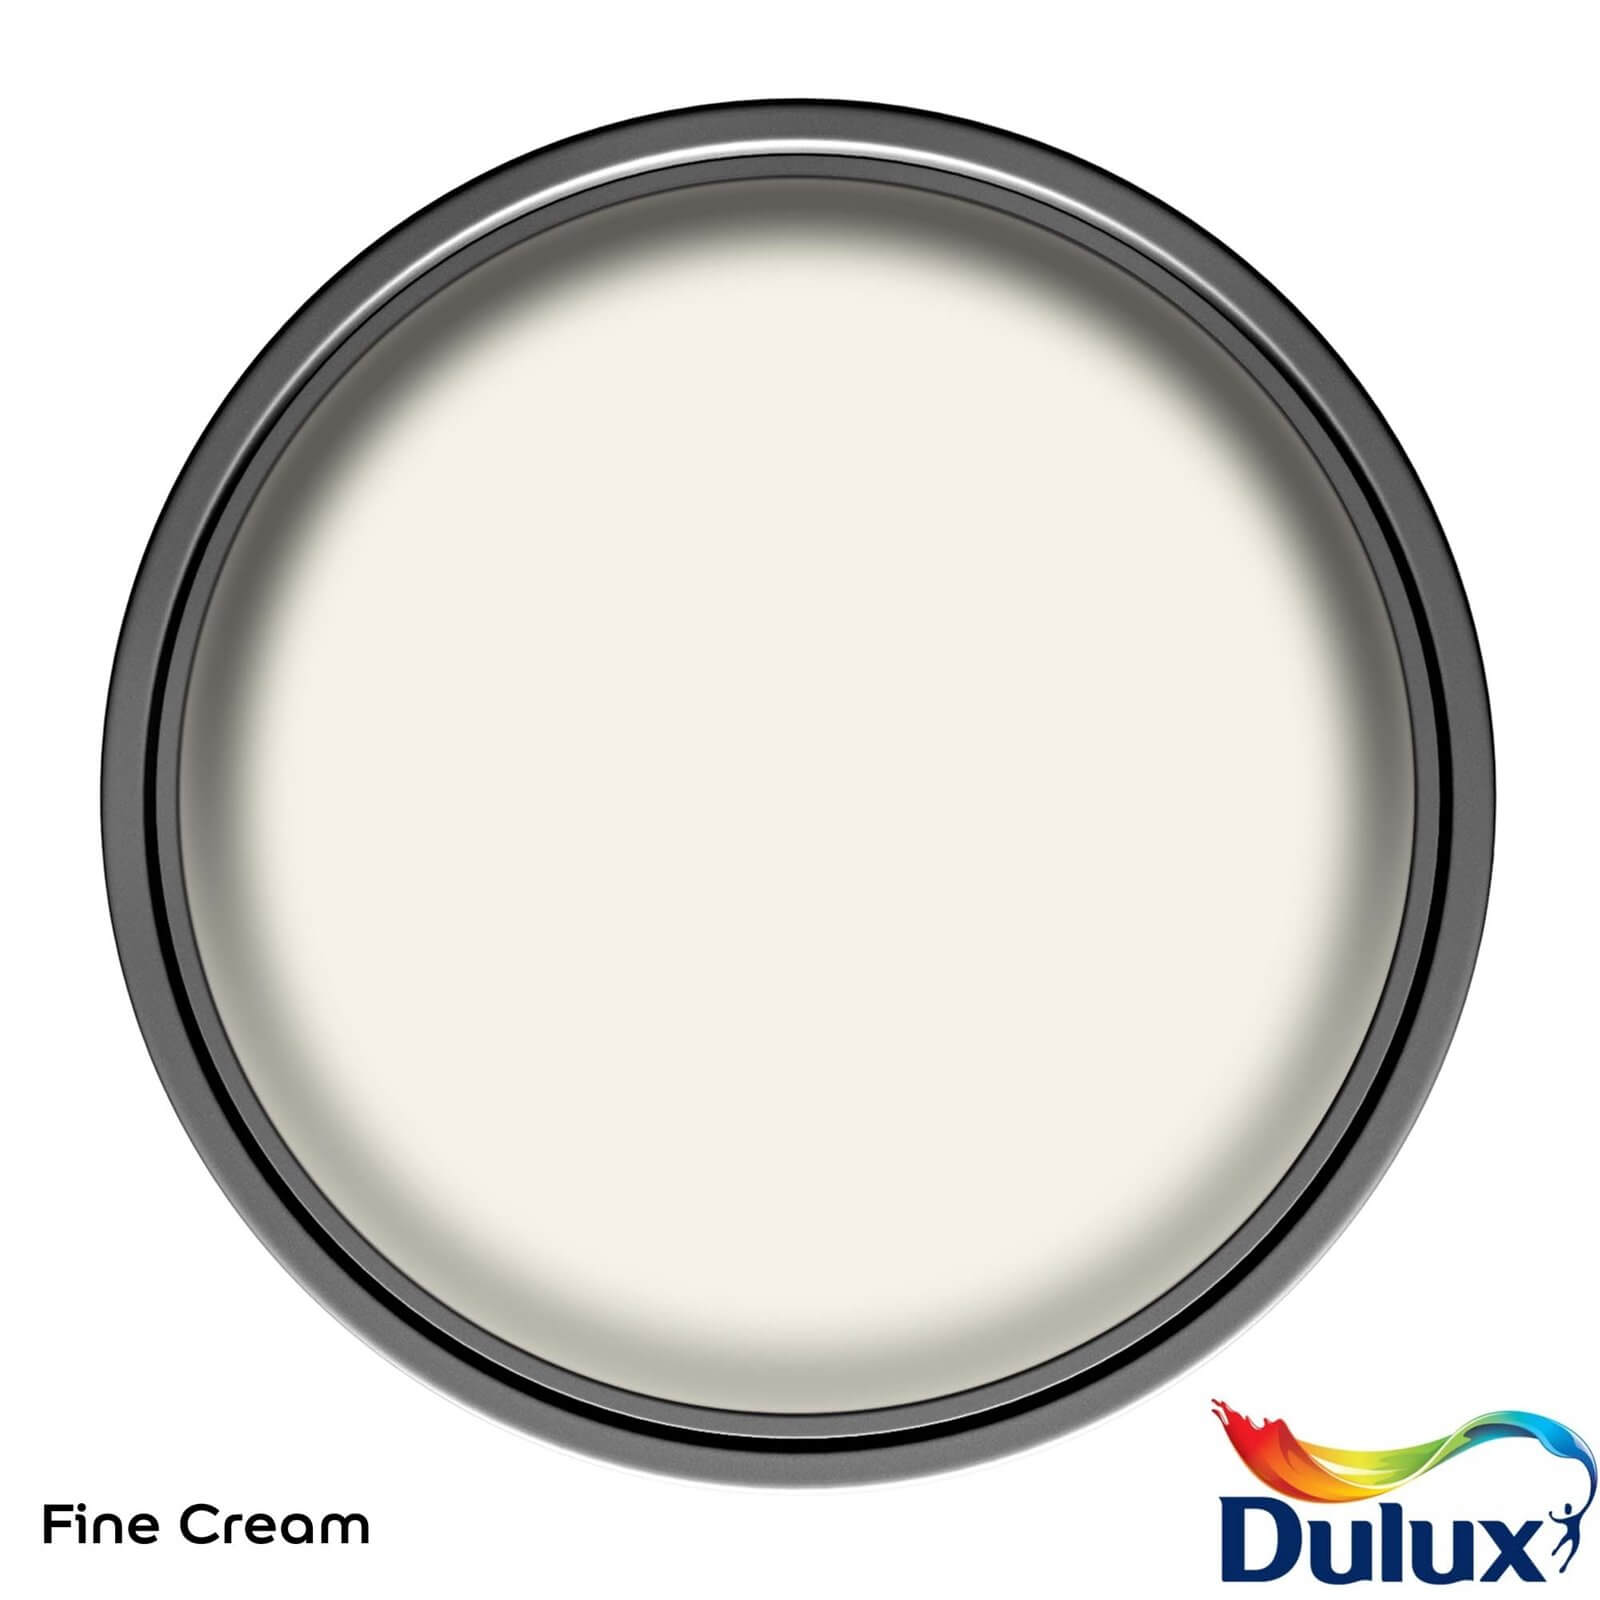 Dulux Matt Emulsion Paint Fine Cream - 5L